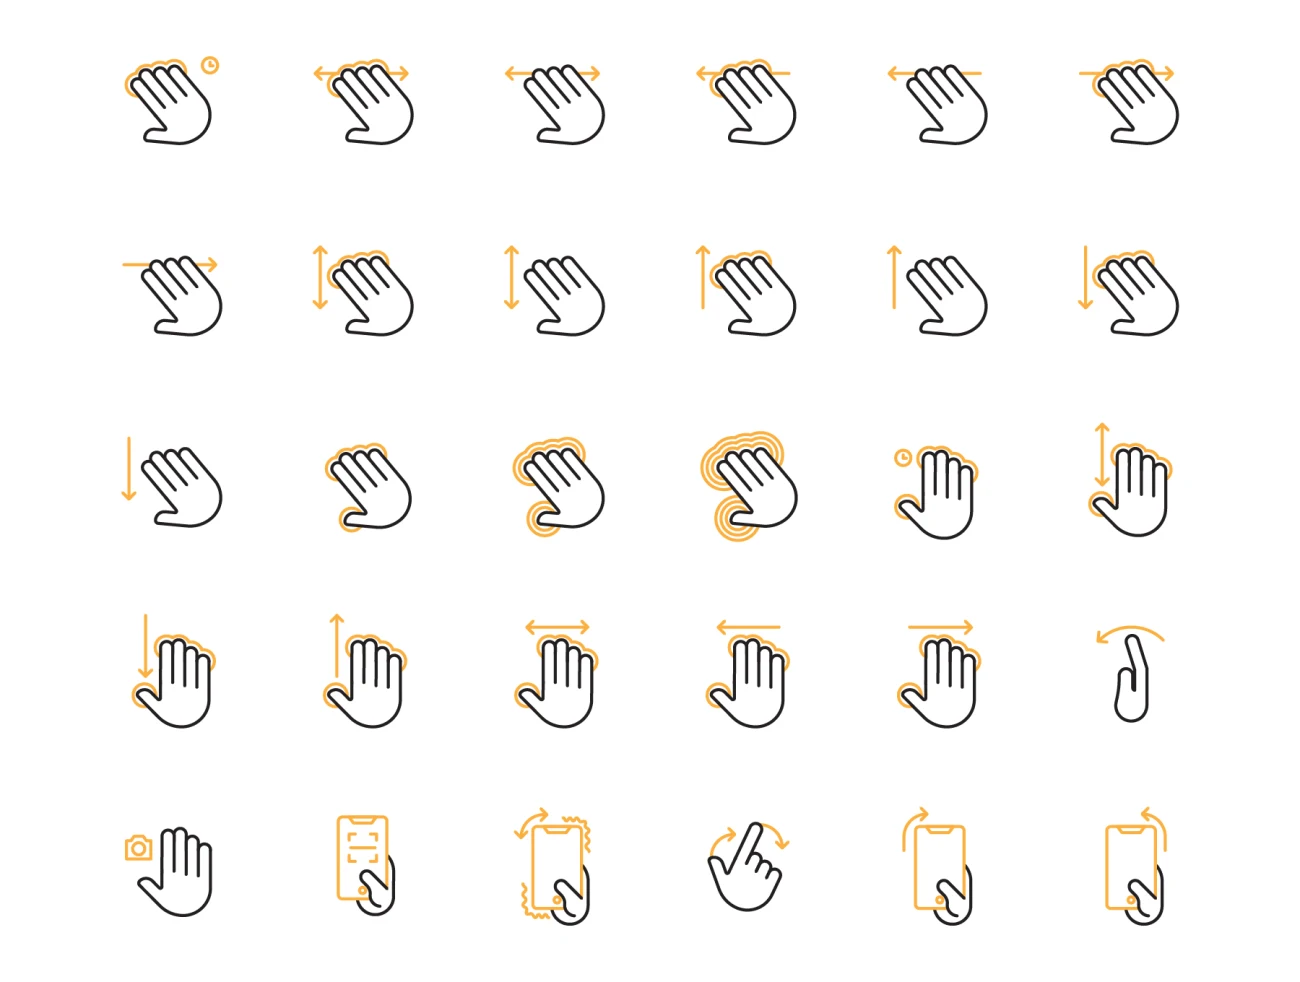 300款手势操作图标素材下载 300 Hand Gesture Icon Set .svg .png .jpeg插图11